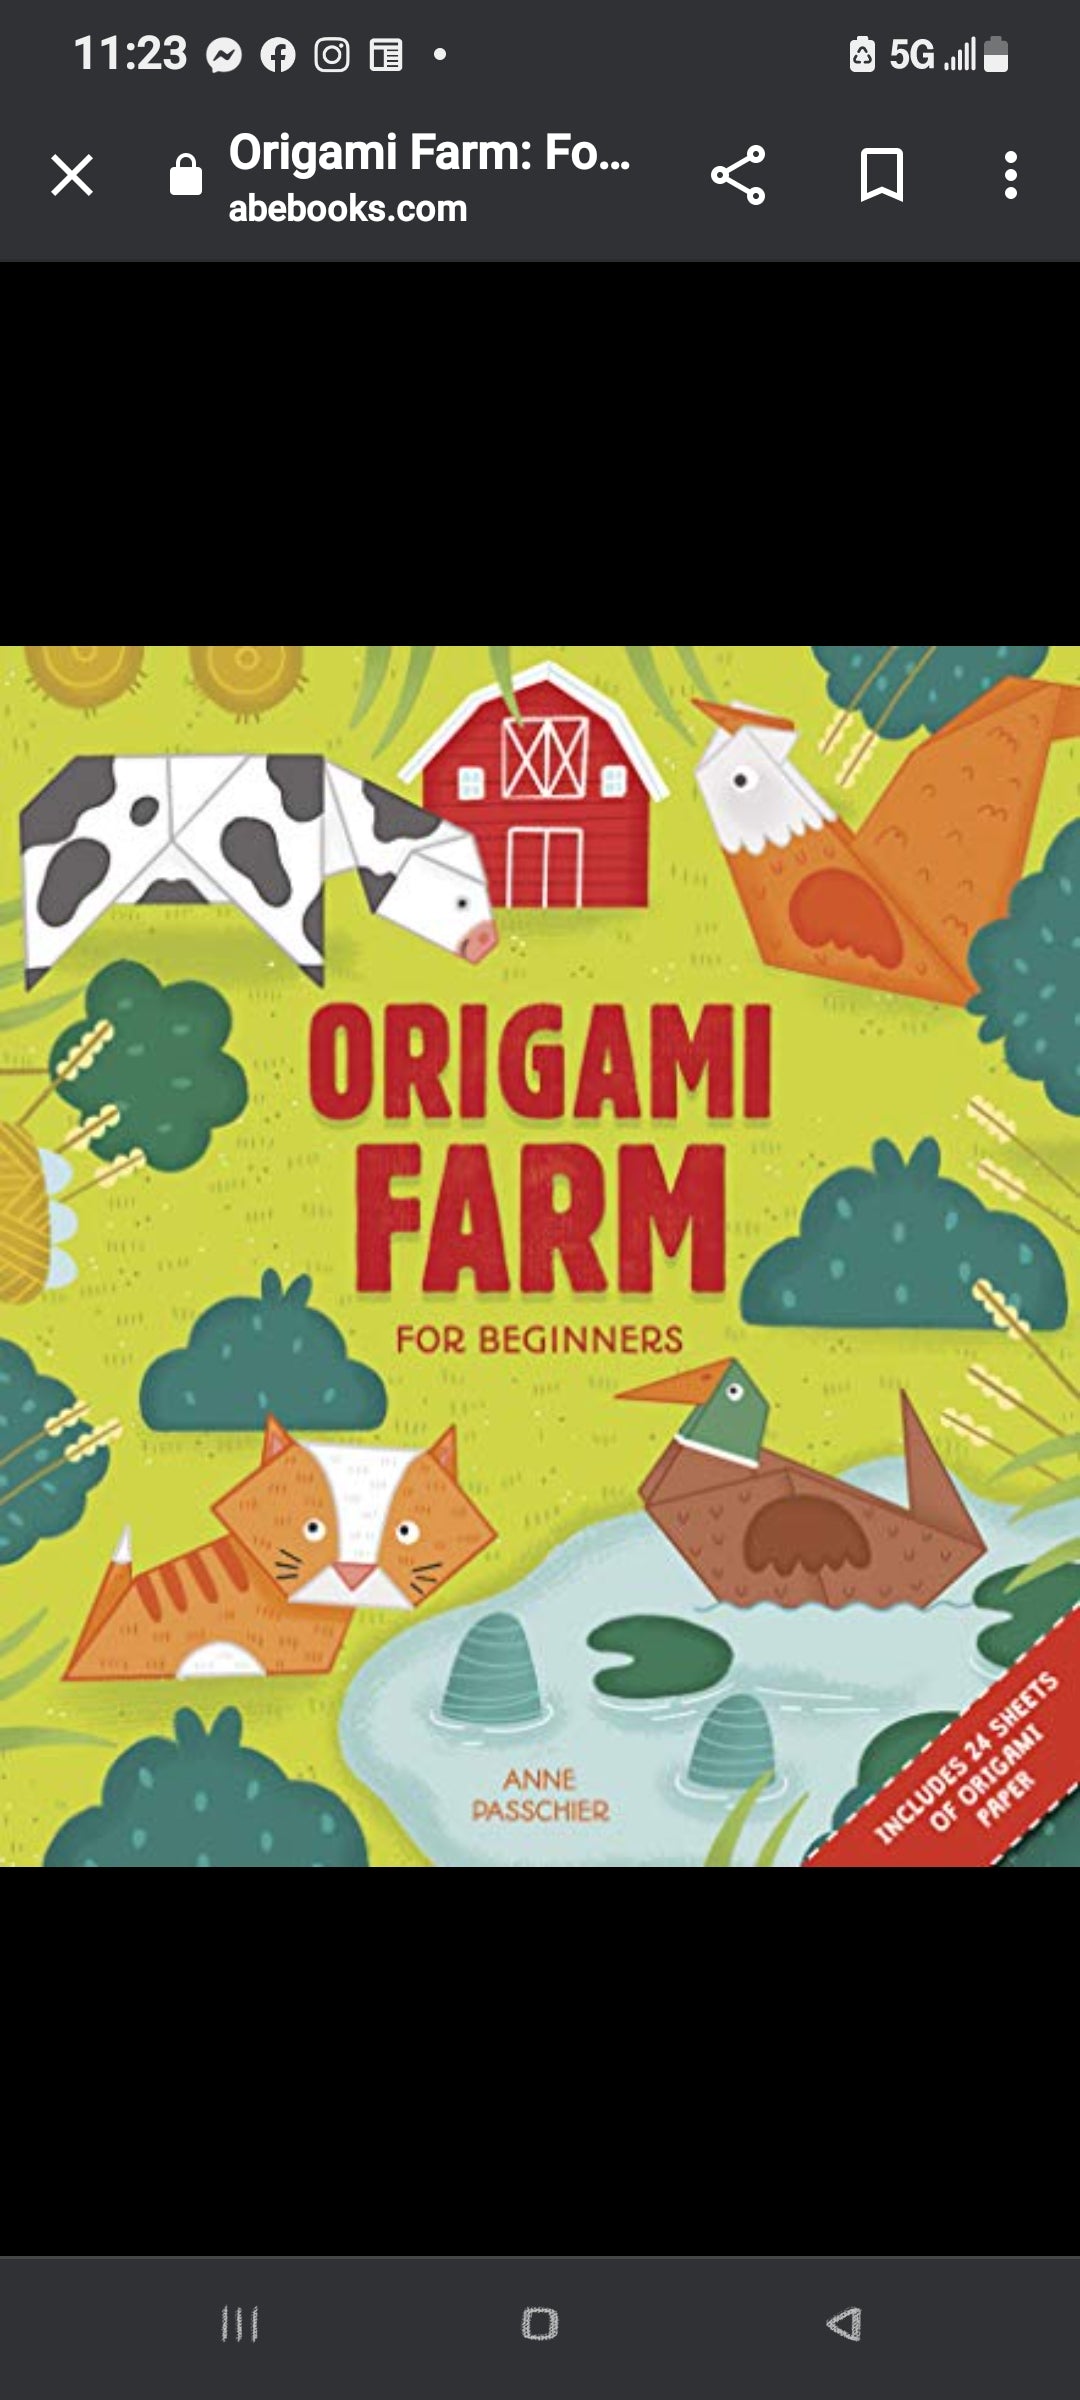 Origami Farm for Beginners